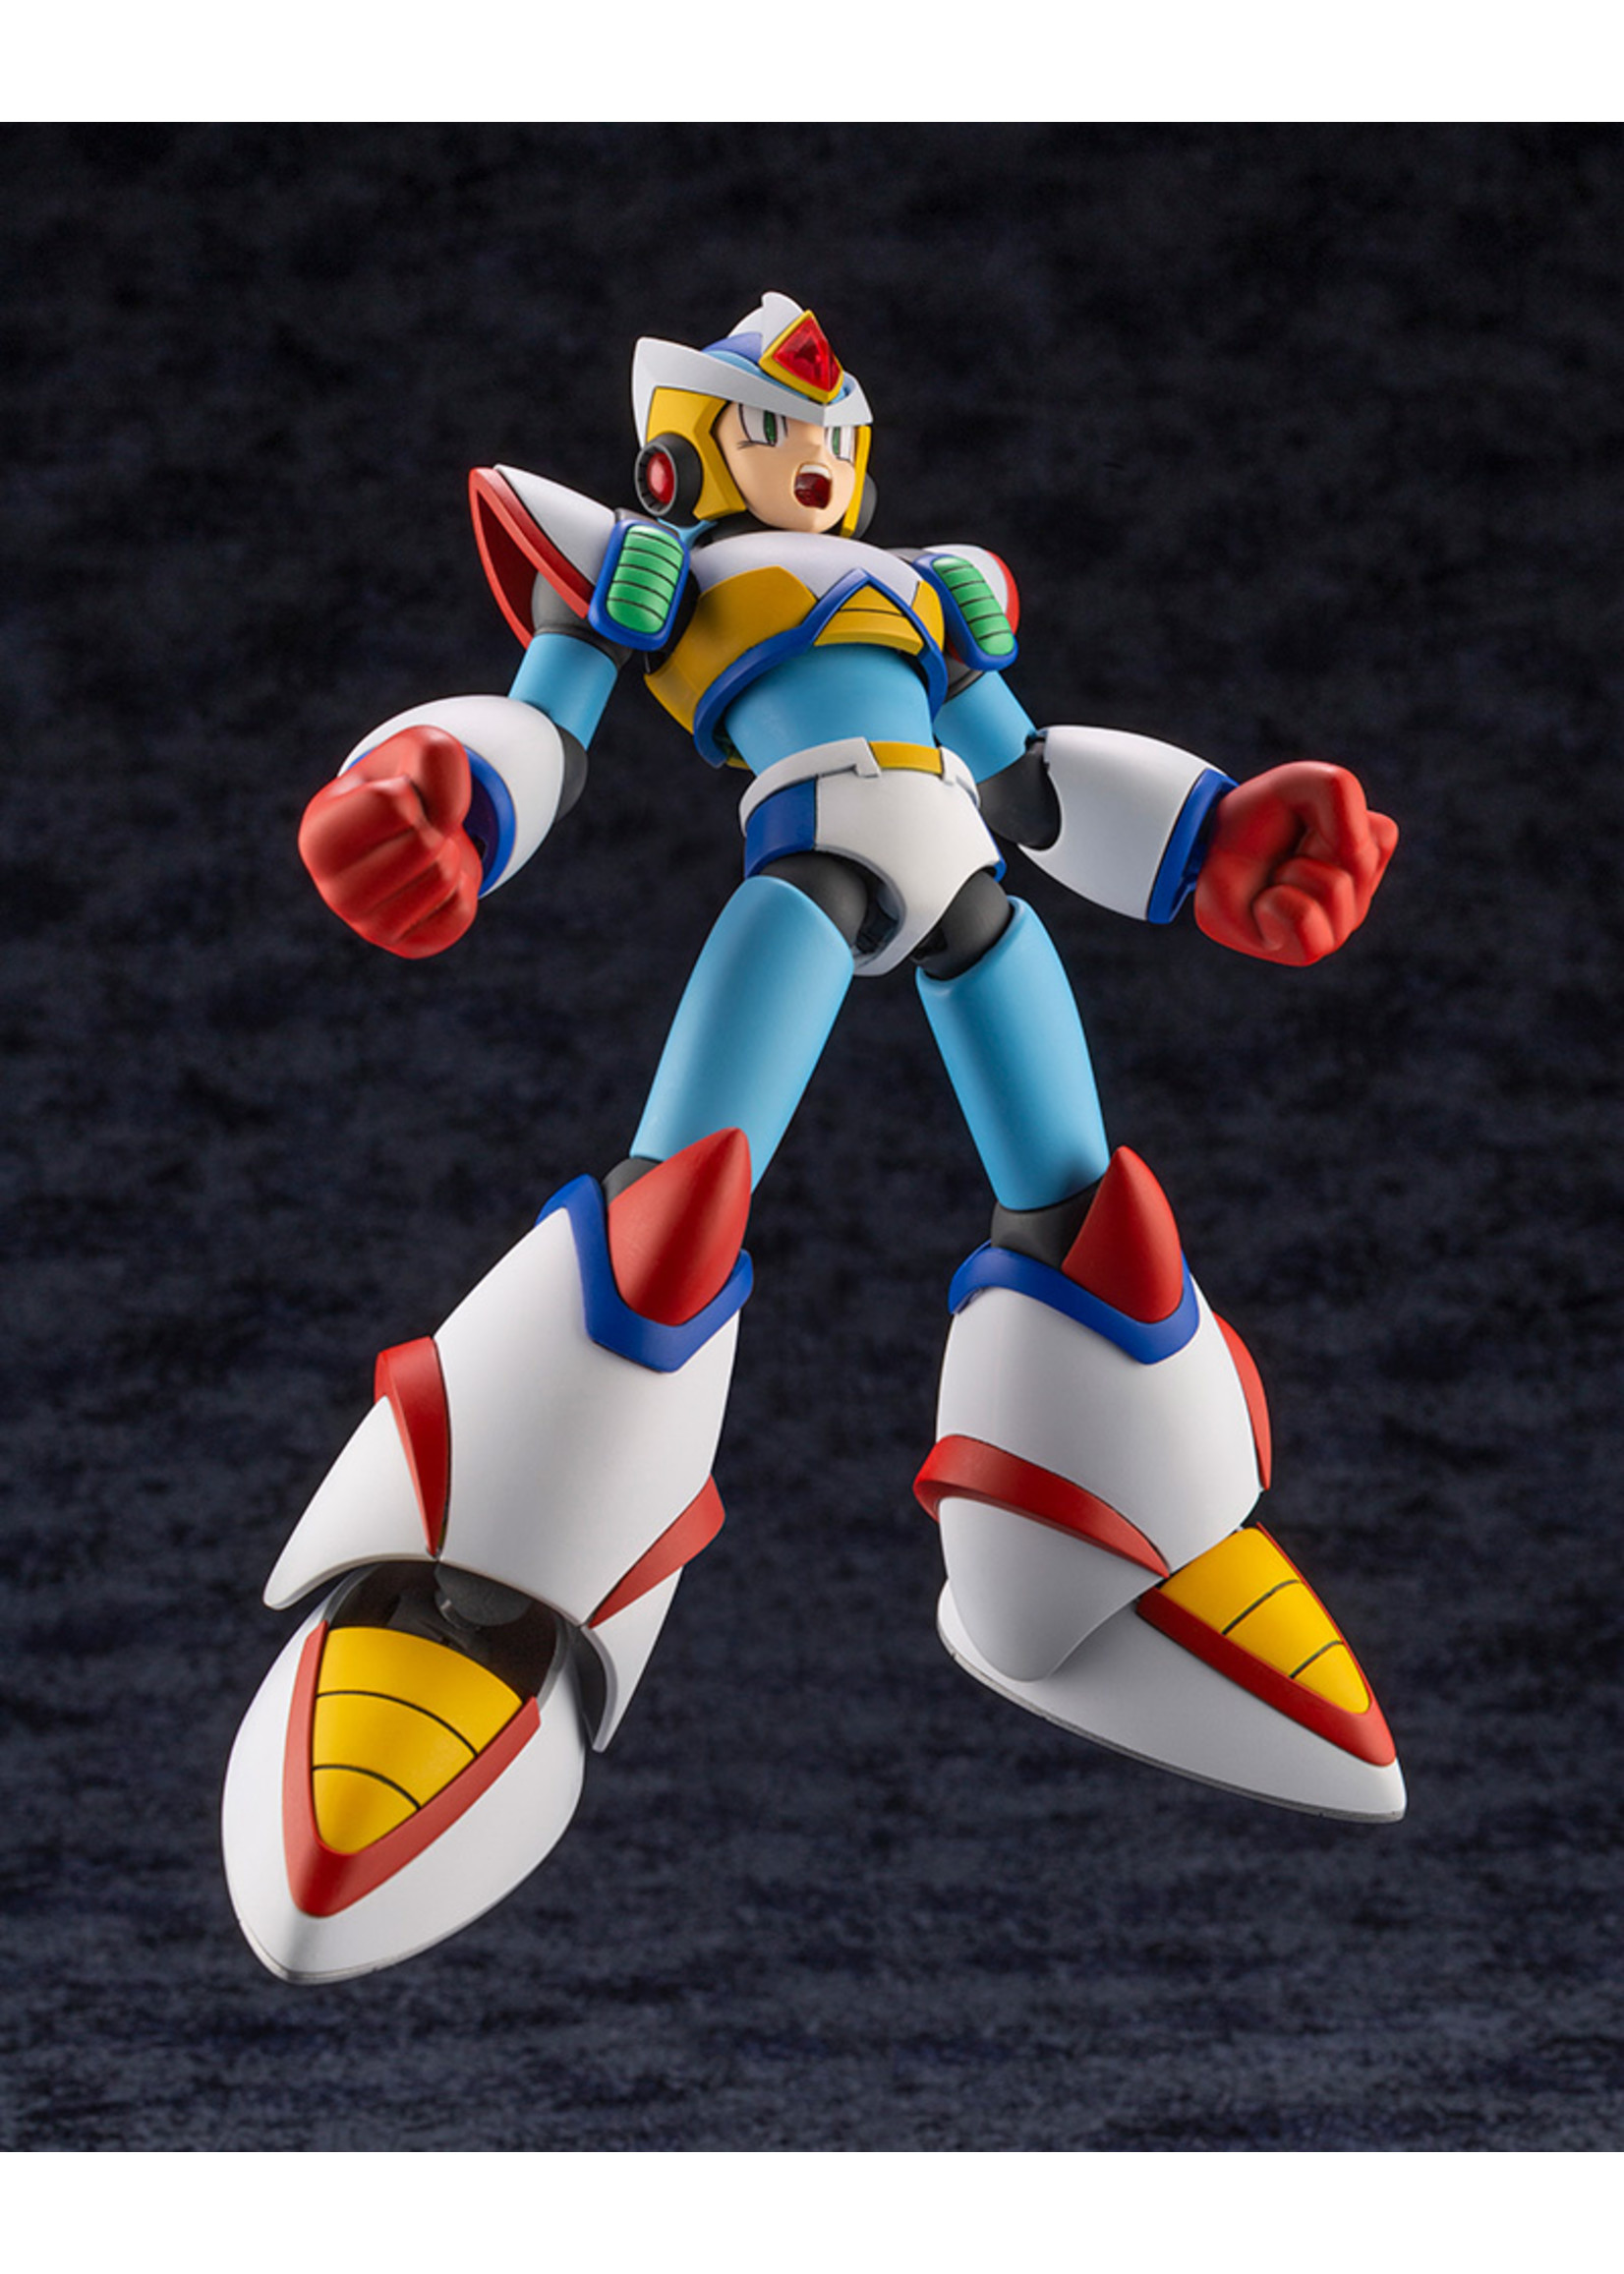 Kotobukiya KP575 - Mega Man X Second Armor